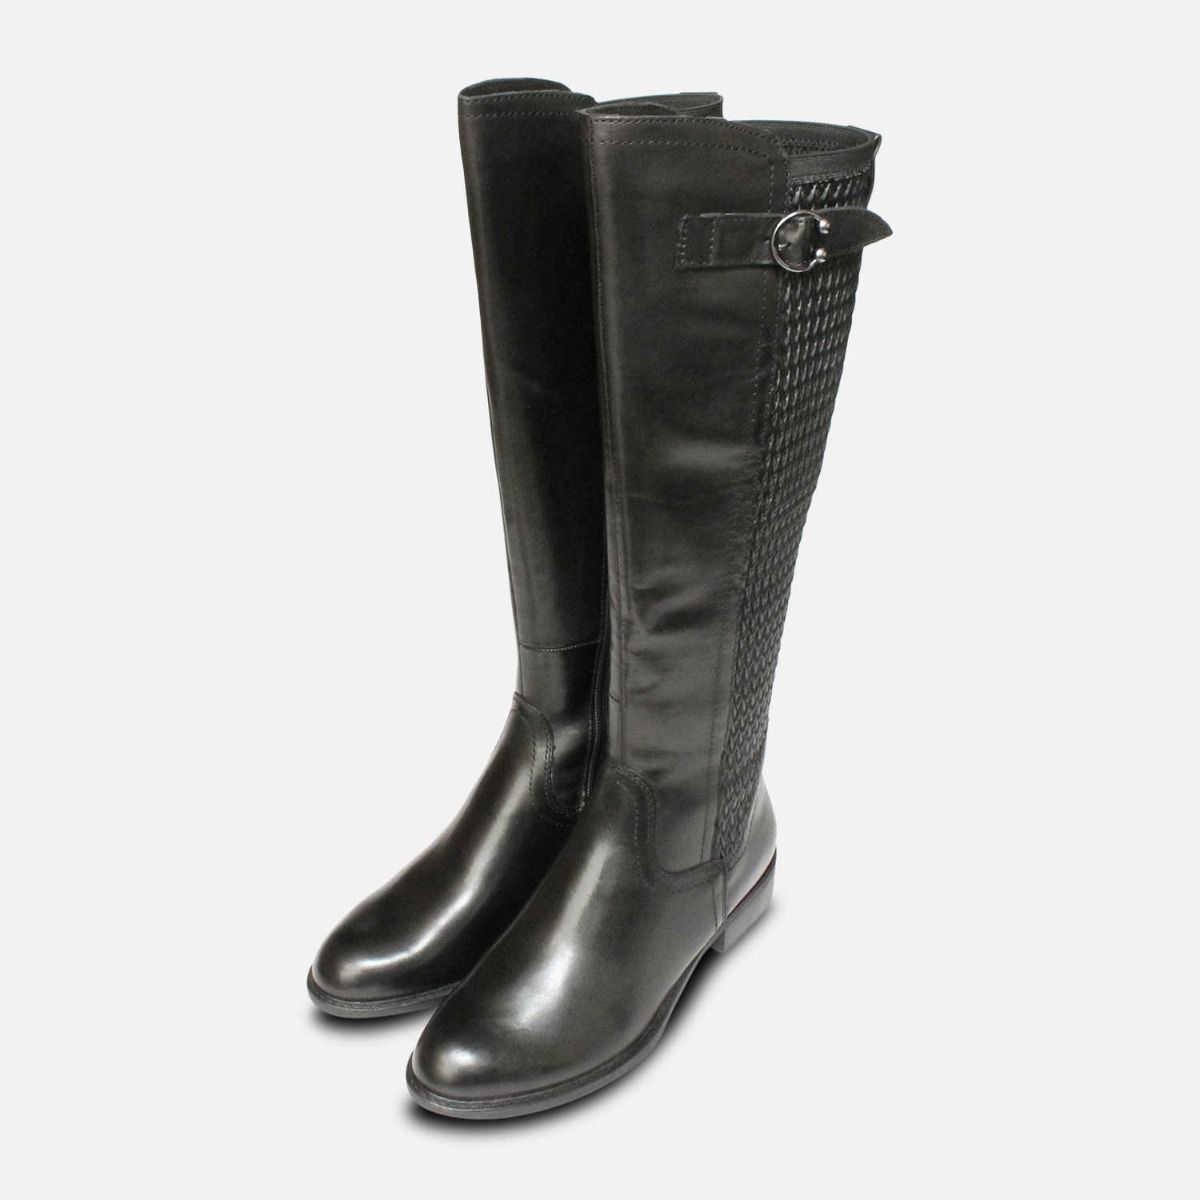 Full Length Plain Black Ladies Boots